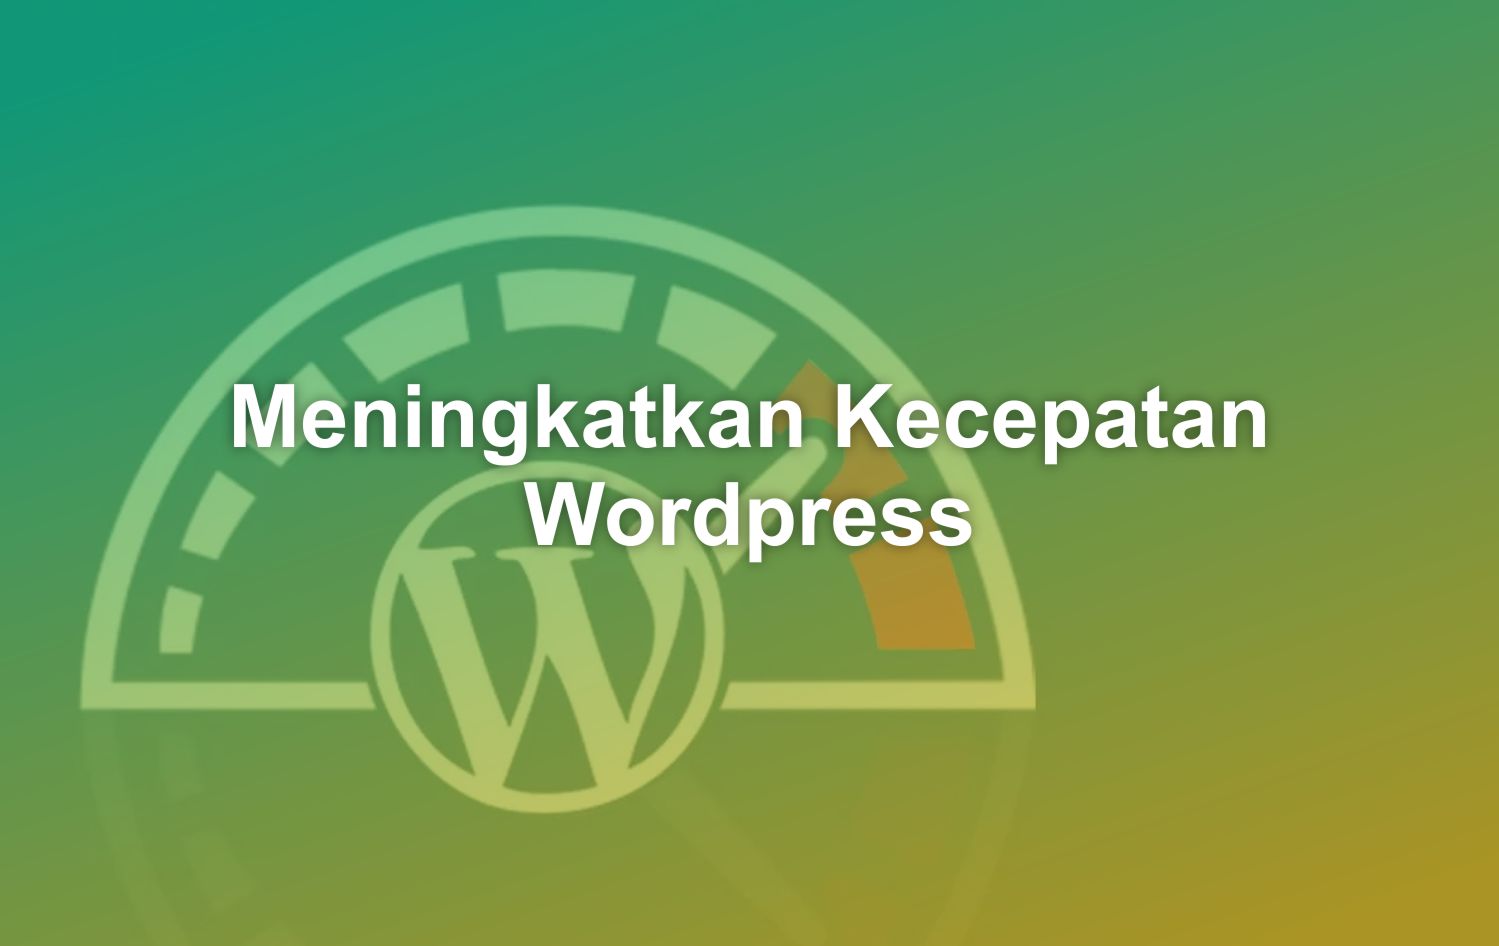 Meningkatkan Kecepatan Wordpress